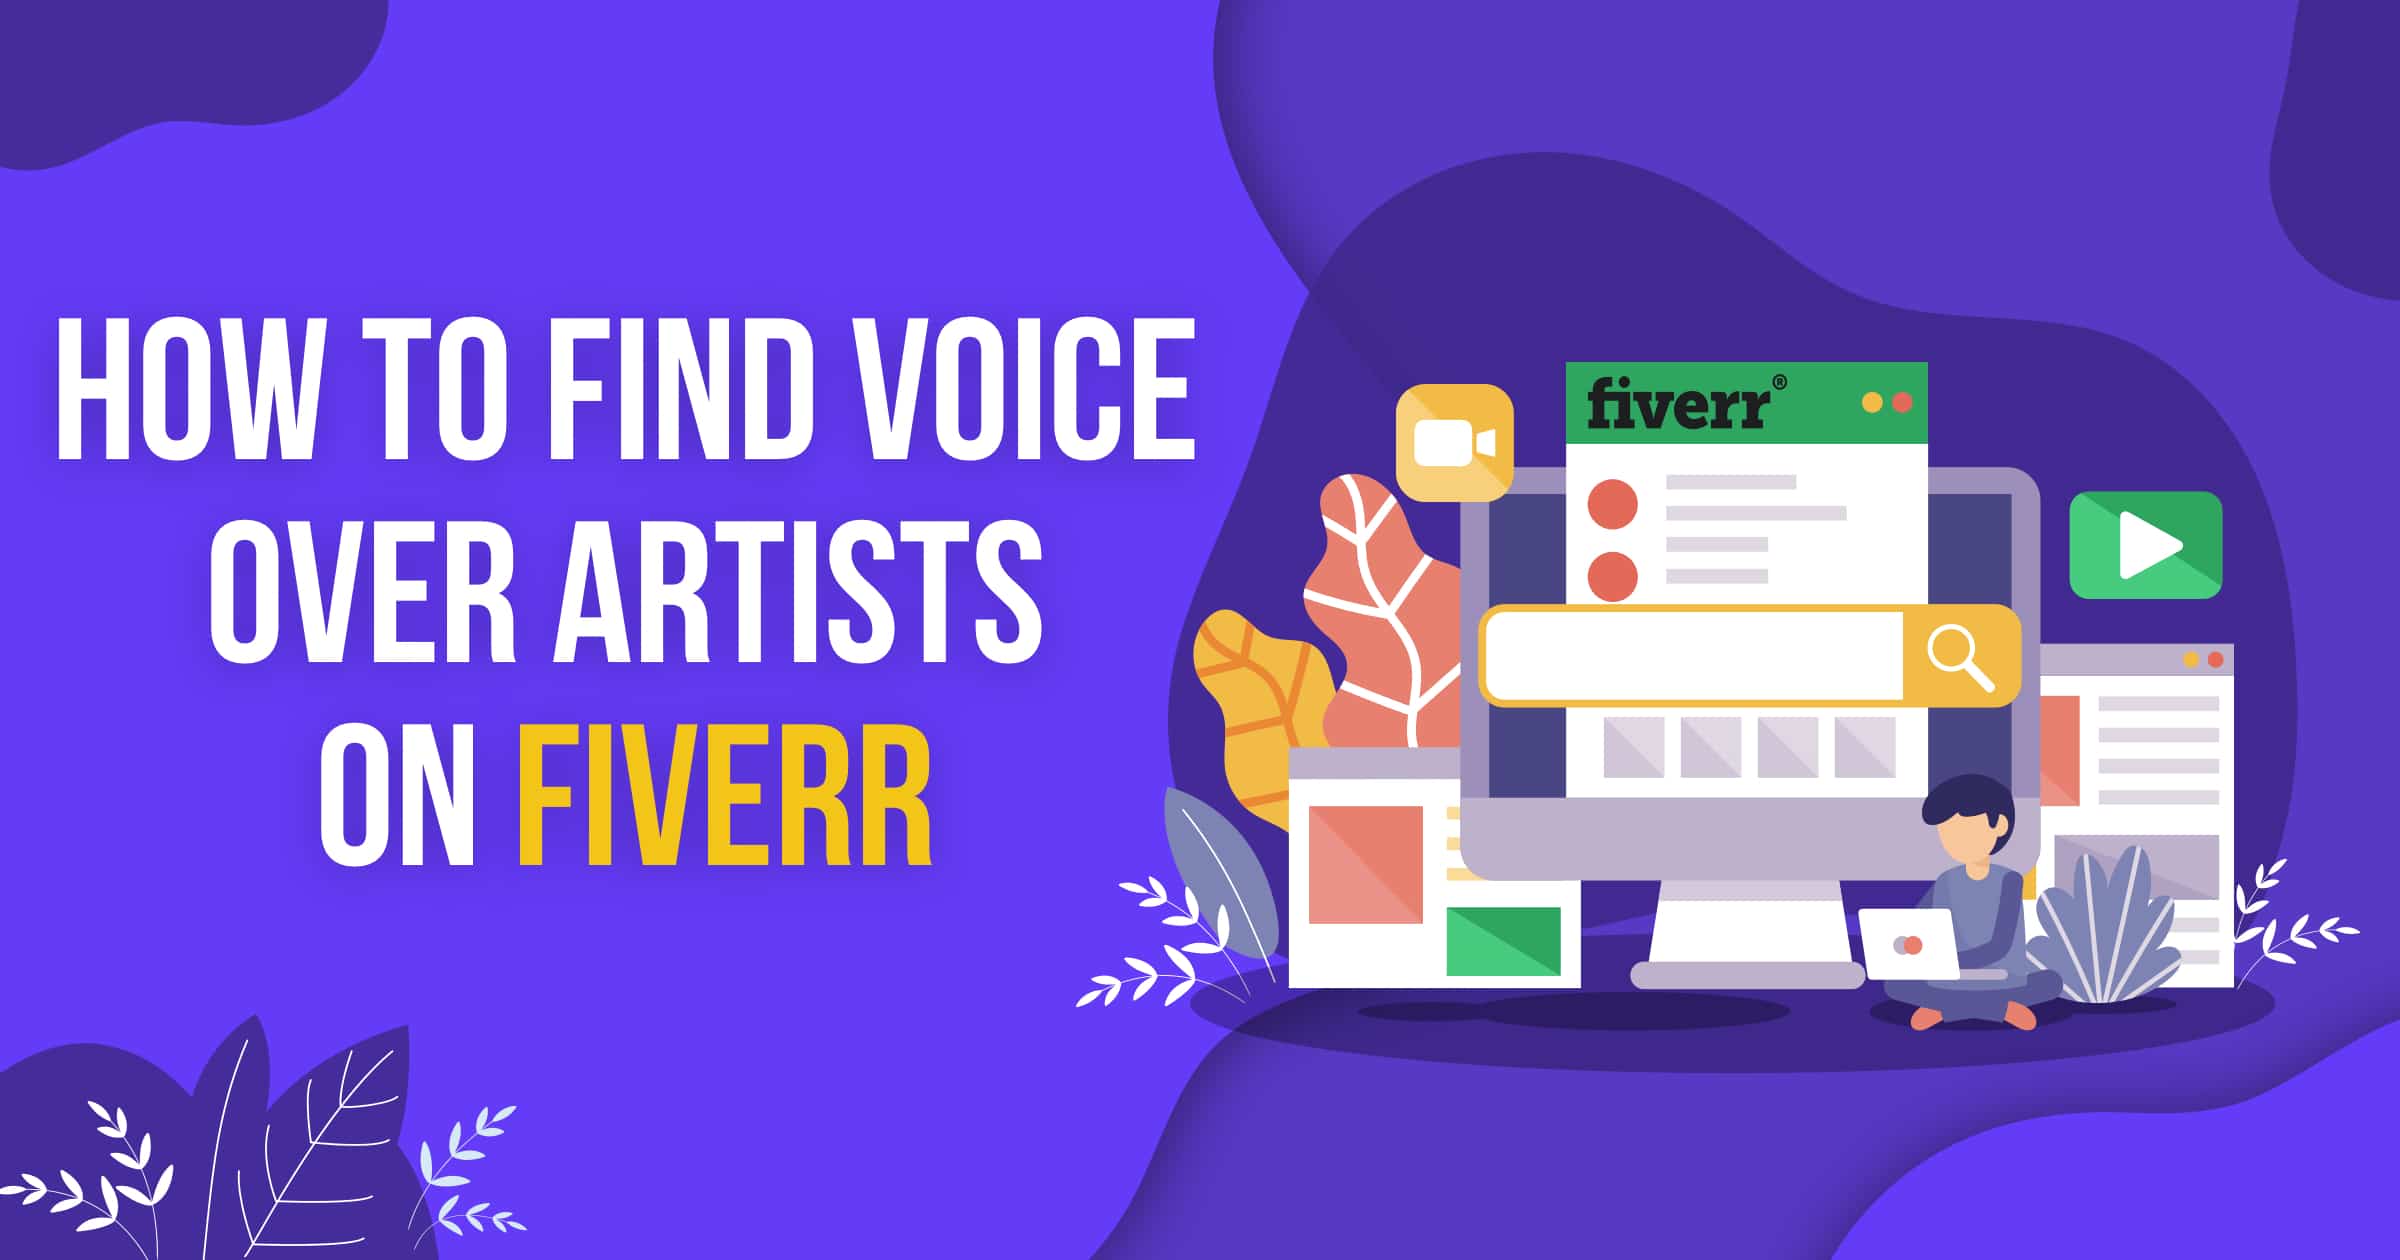 Fiverr Voice Over Tips - Fiverr Voice Over